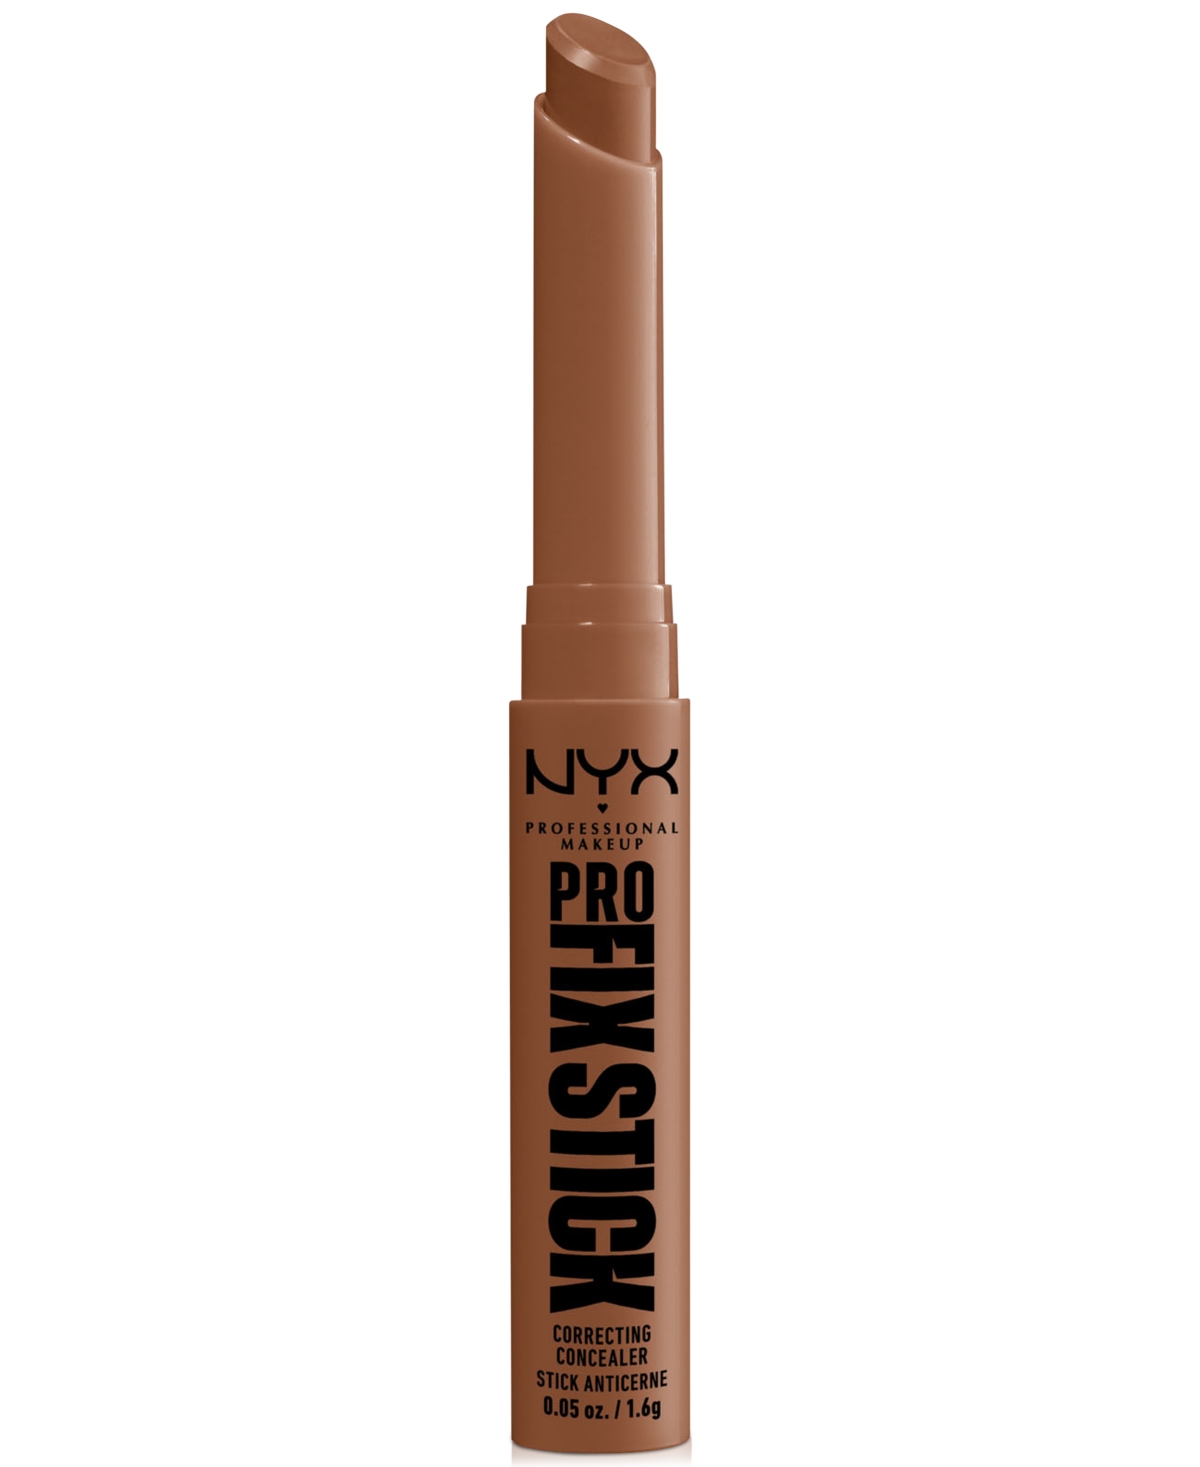 Nyx Professional Makeup Pro Fix Stick Correcting Concealer, 0.05 oz. - Sienna